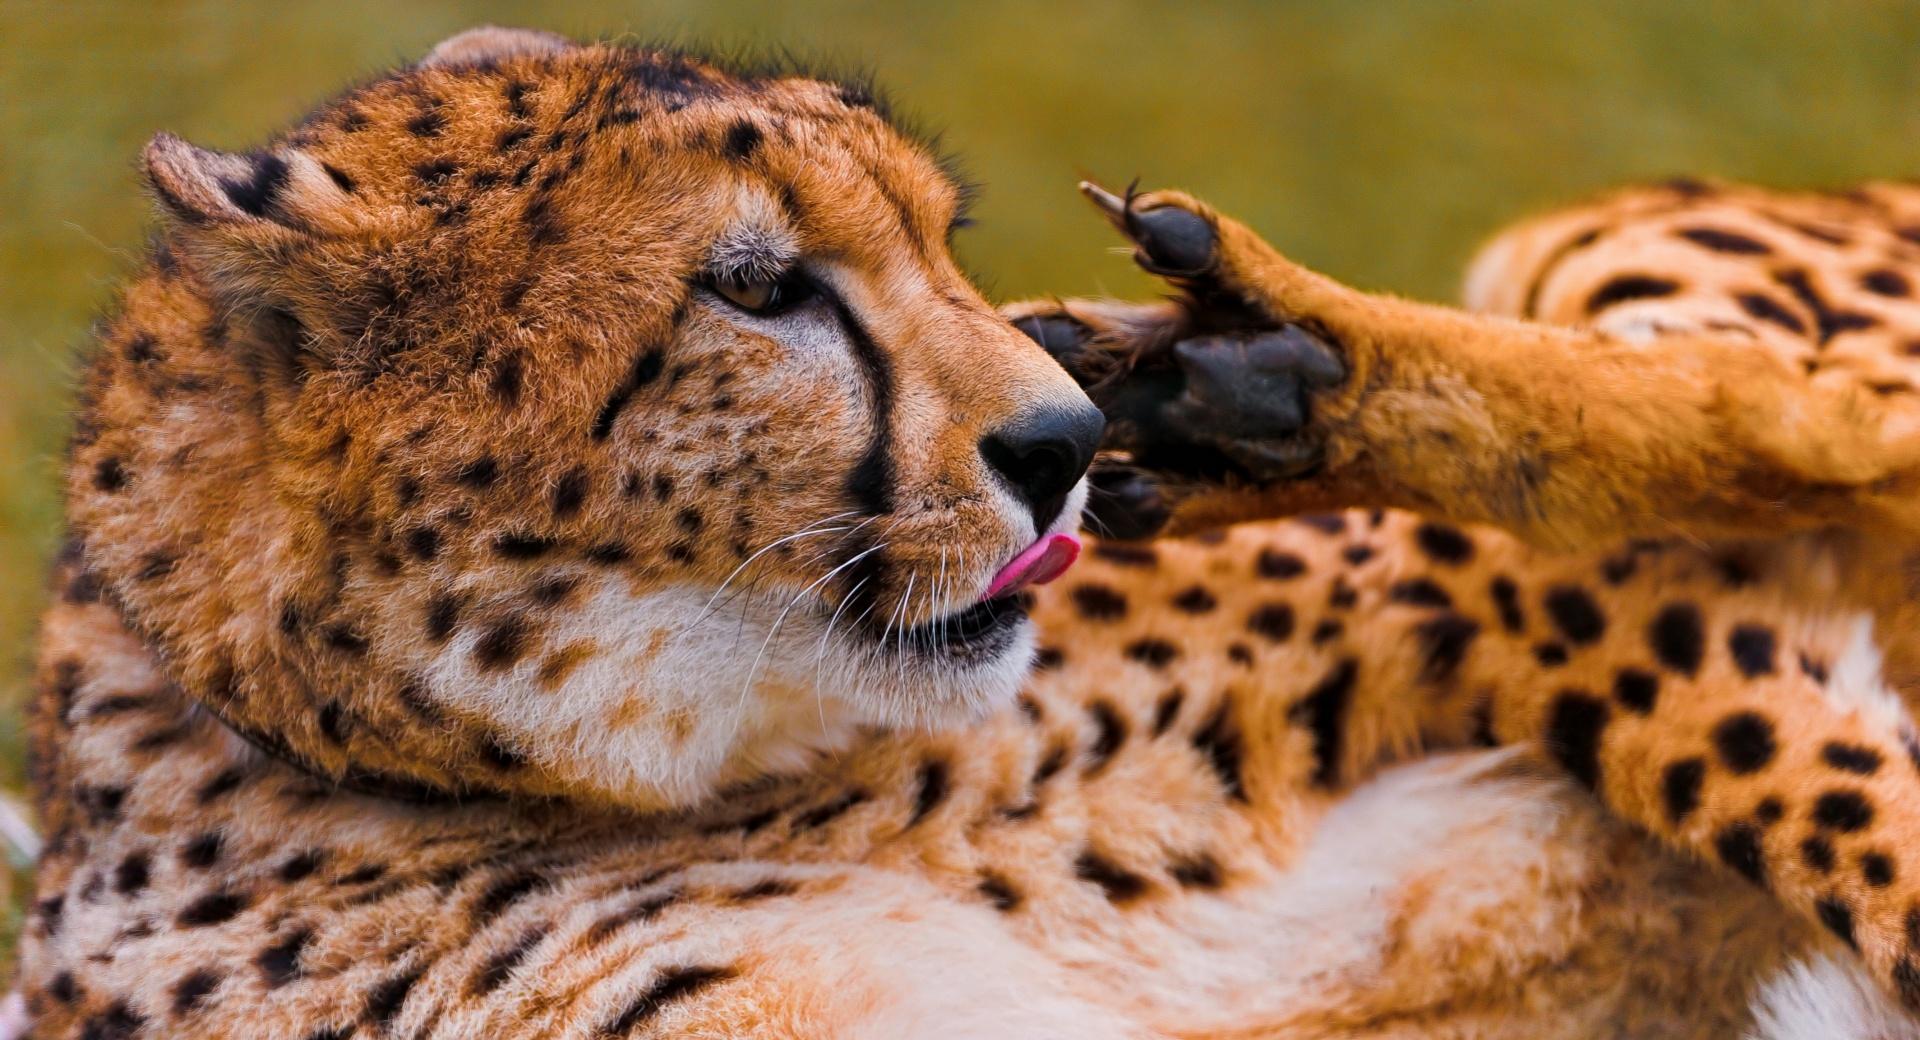 Cheetah Licking His Paw at 1024 x 1024 iPad size wallpapers HD quality